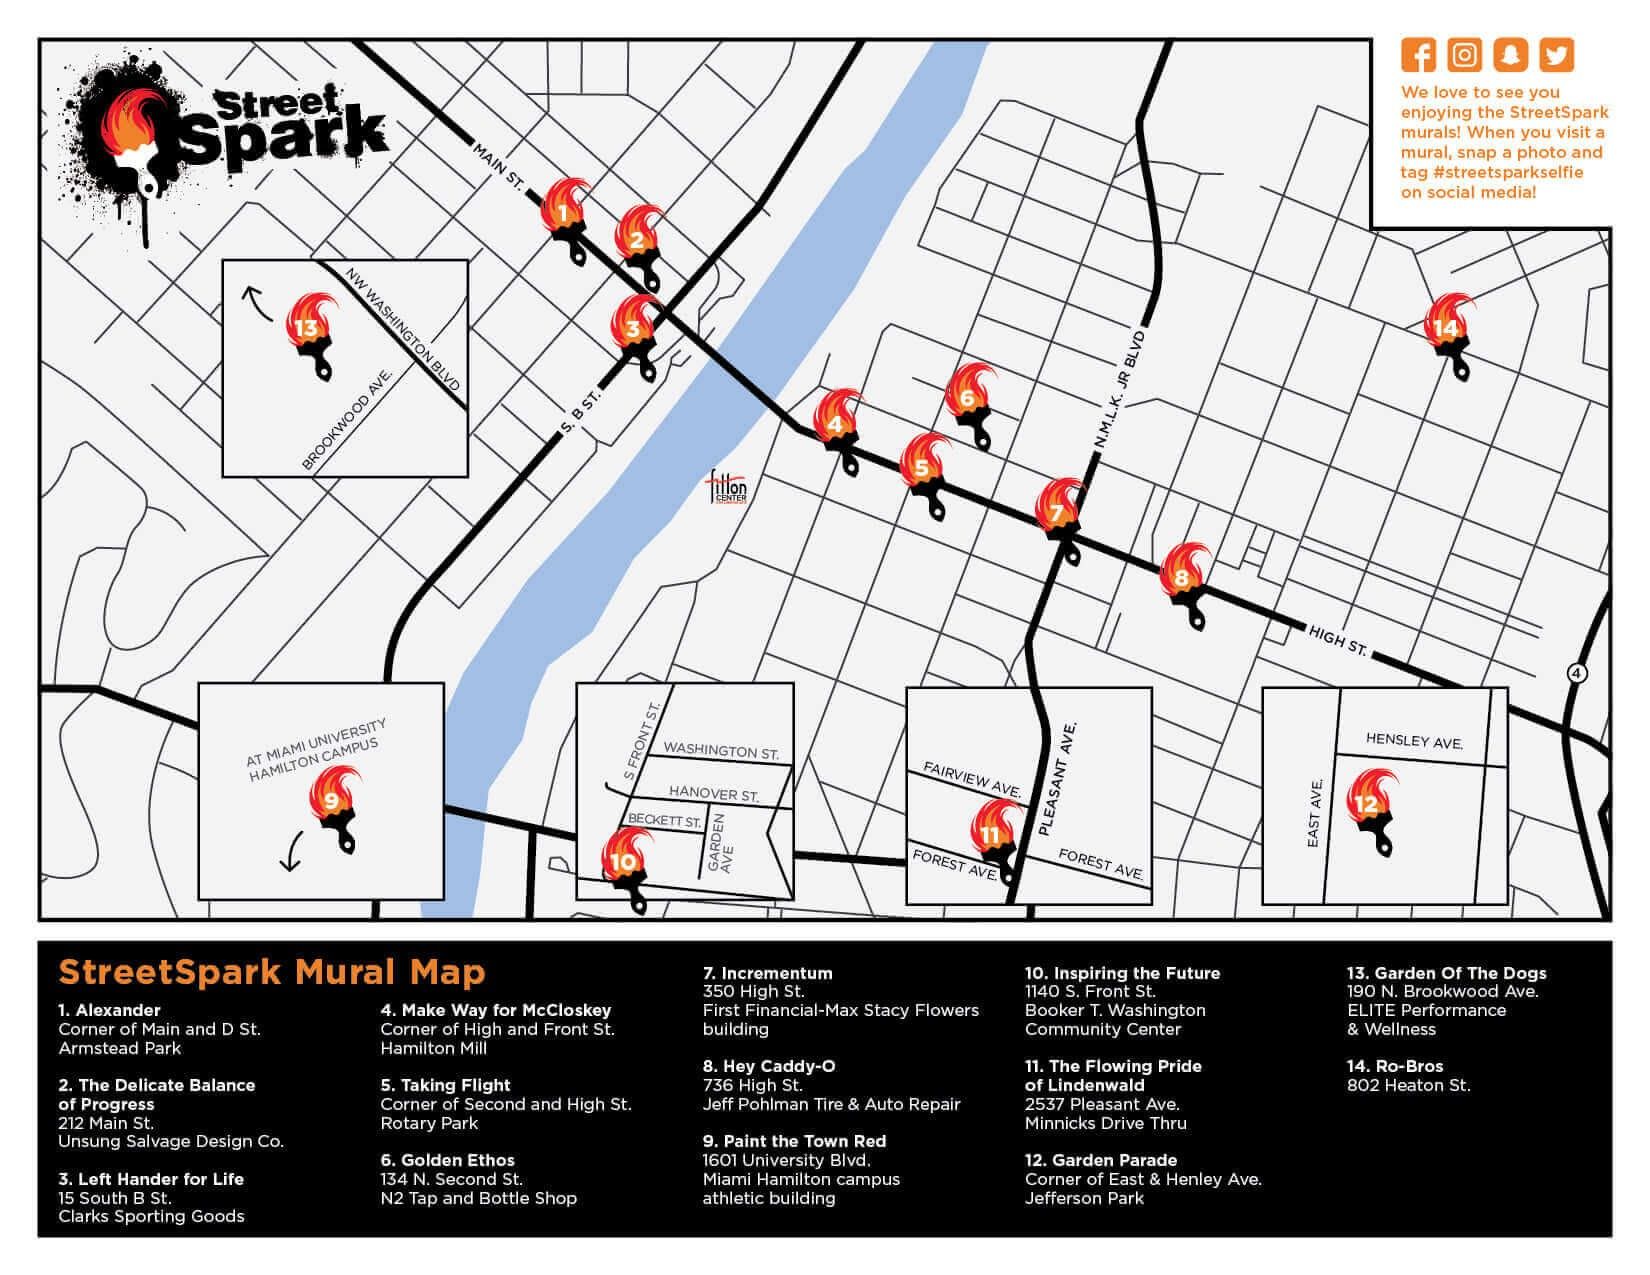 StreetSpark Mural Tour Map